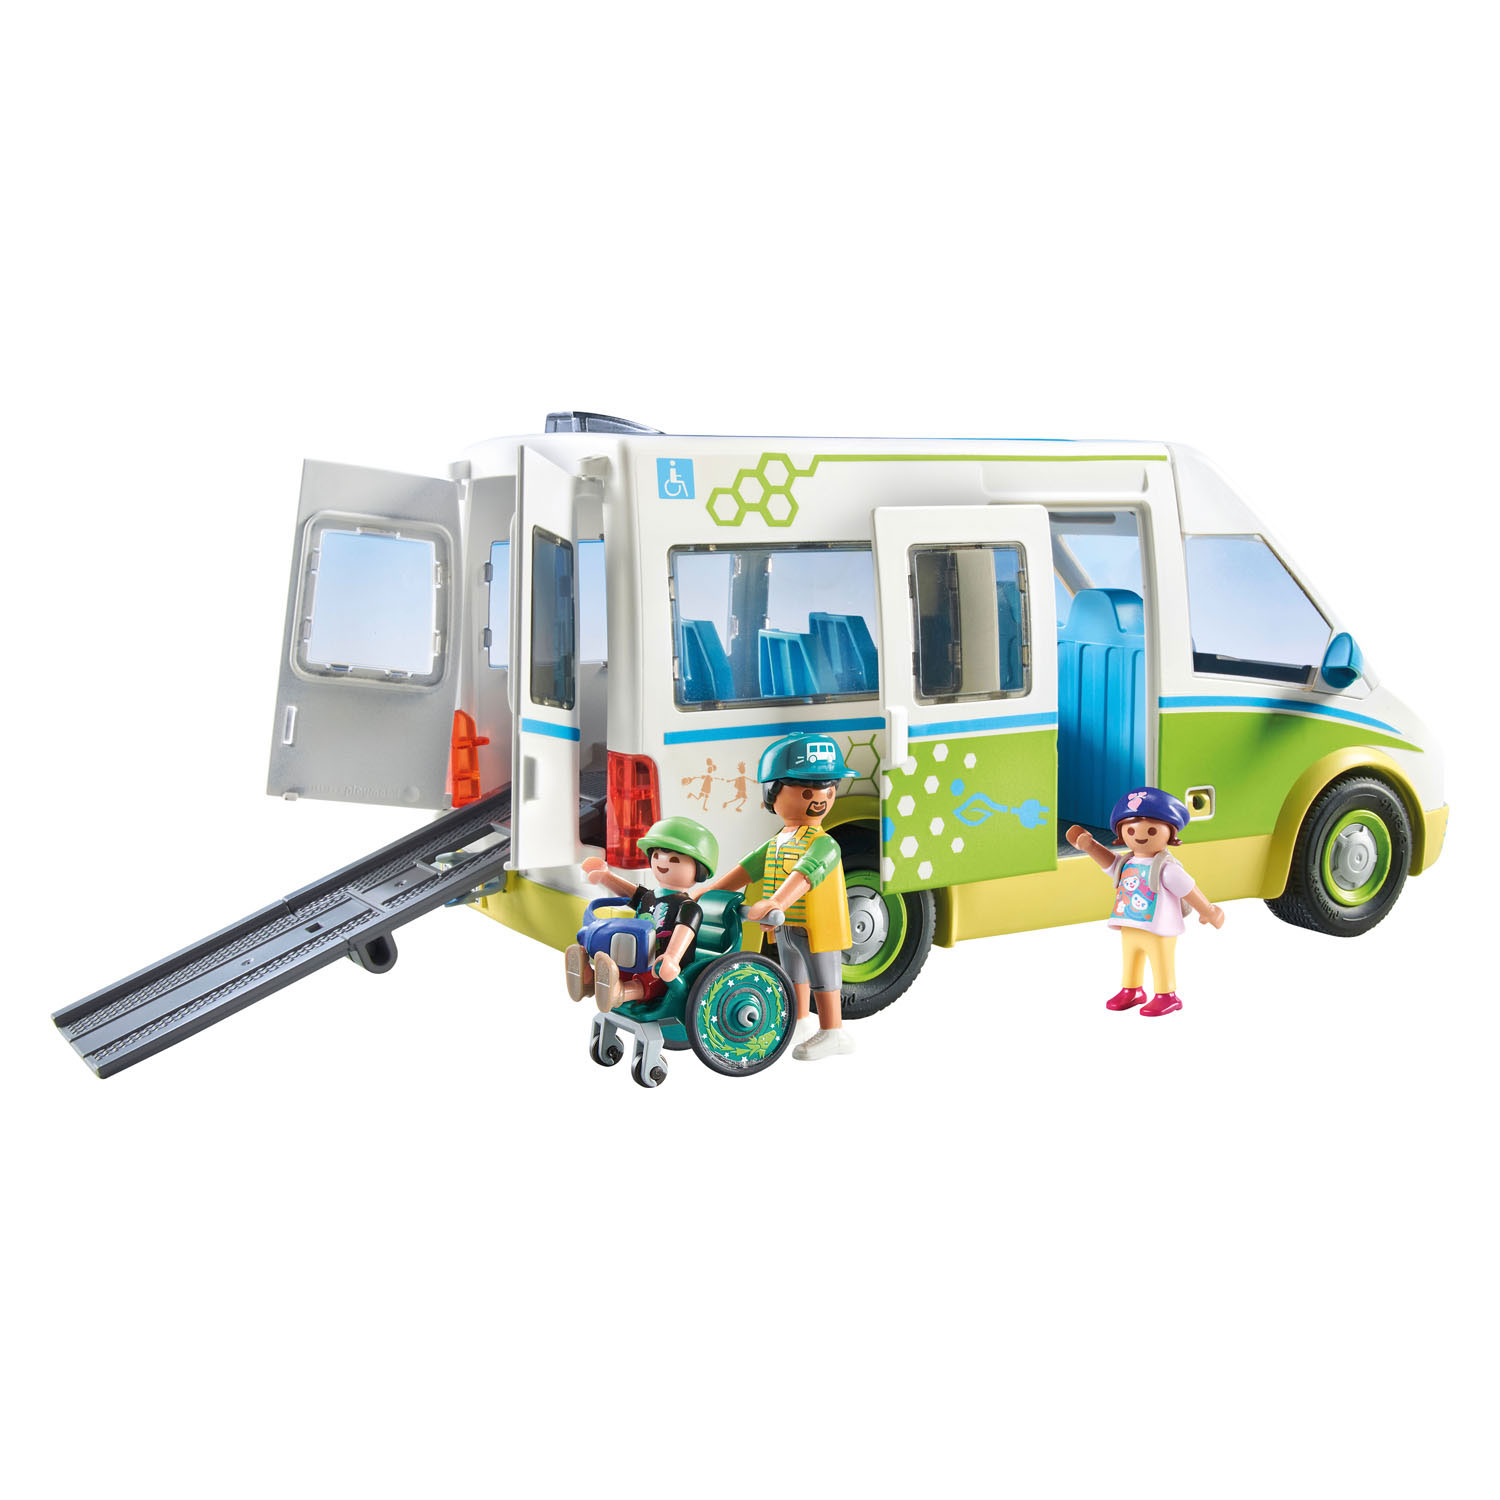 Playmobil City Life Autobus scolaire - 71329